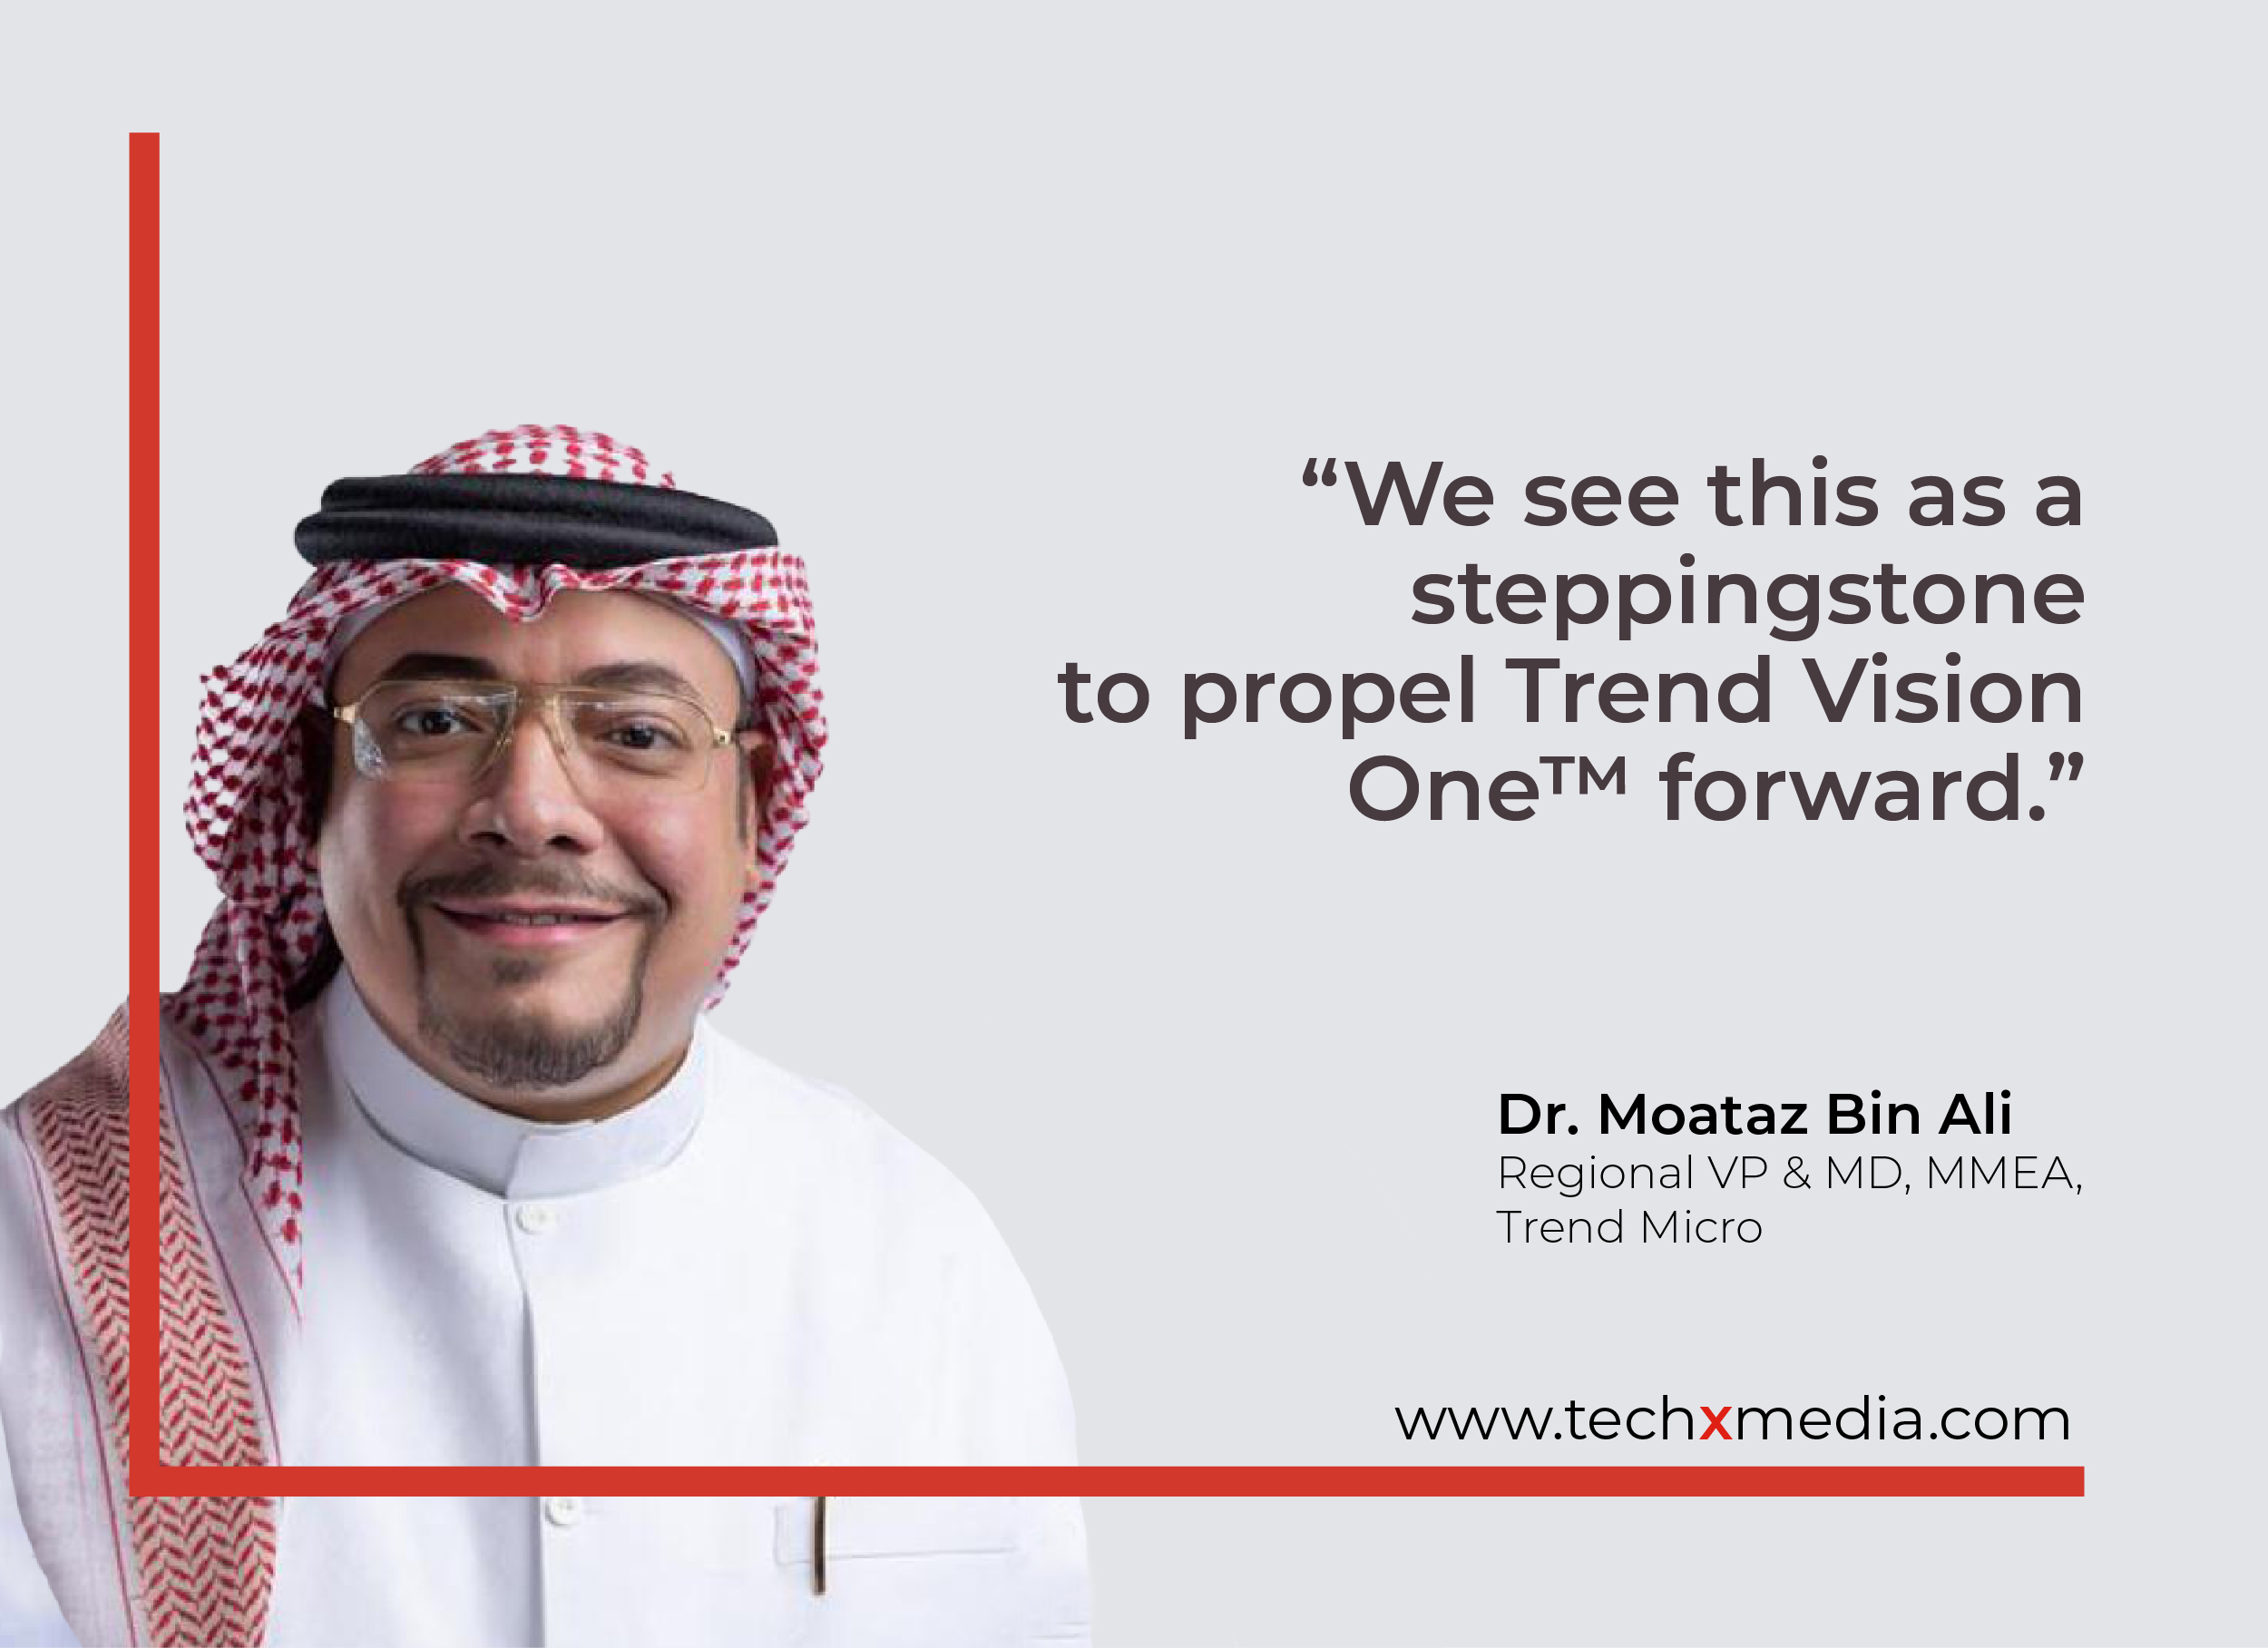 Dr. Moataz Bin Ali, Regional Vice President & Managing Director, MMEA, Trend Micro